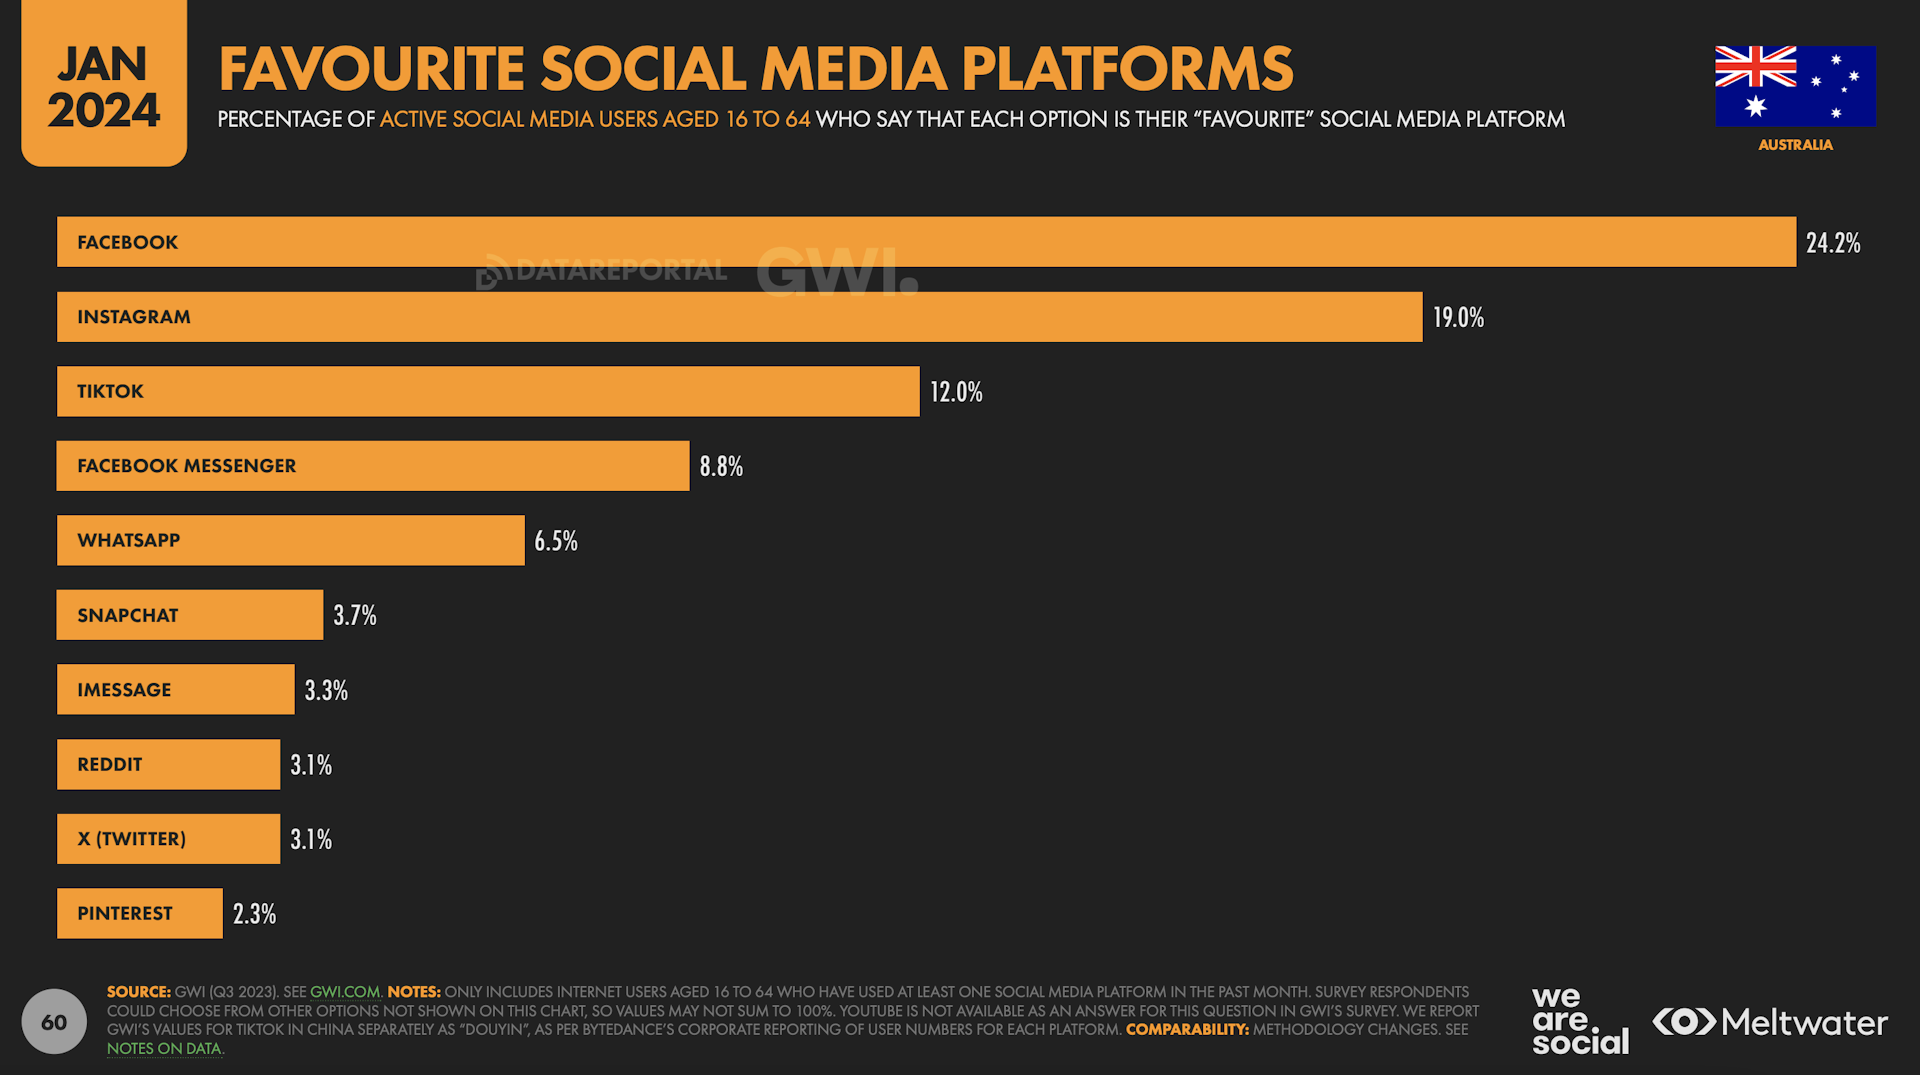 Favourite social media platforms based on Global Digital Report 2024 for Australia